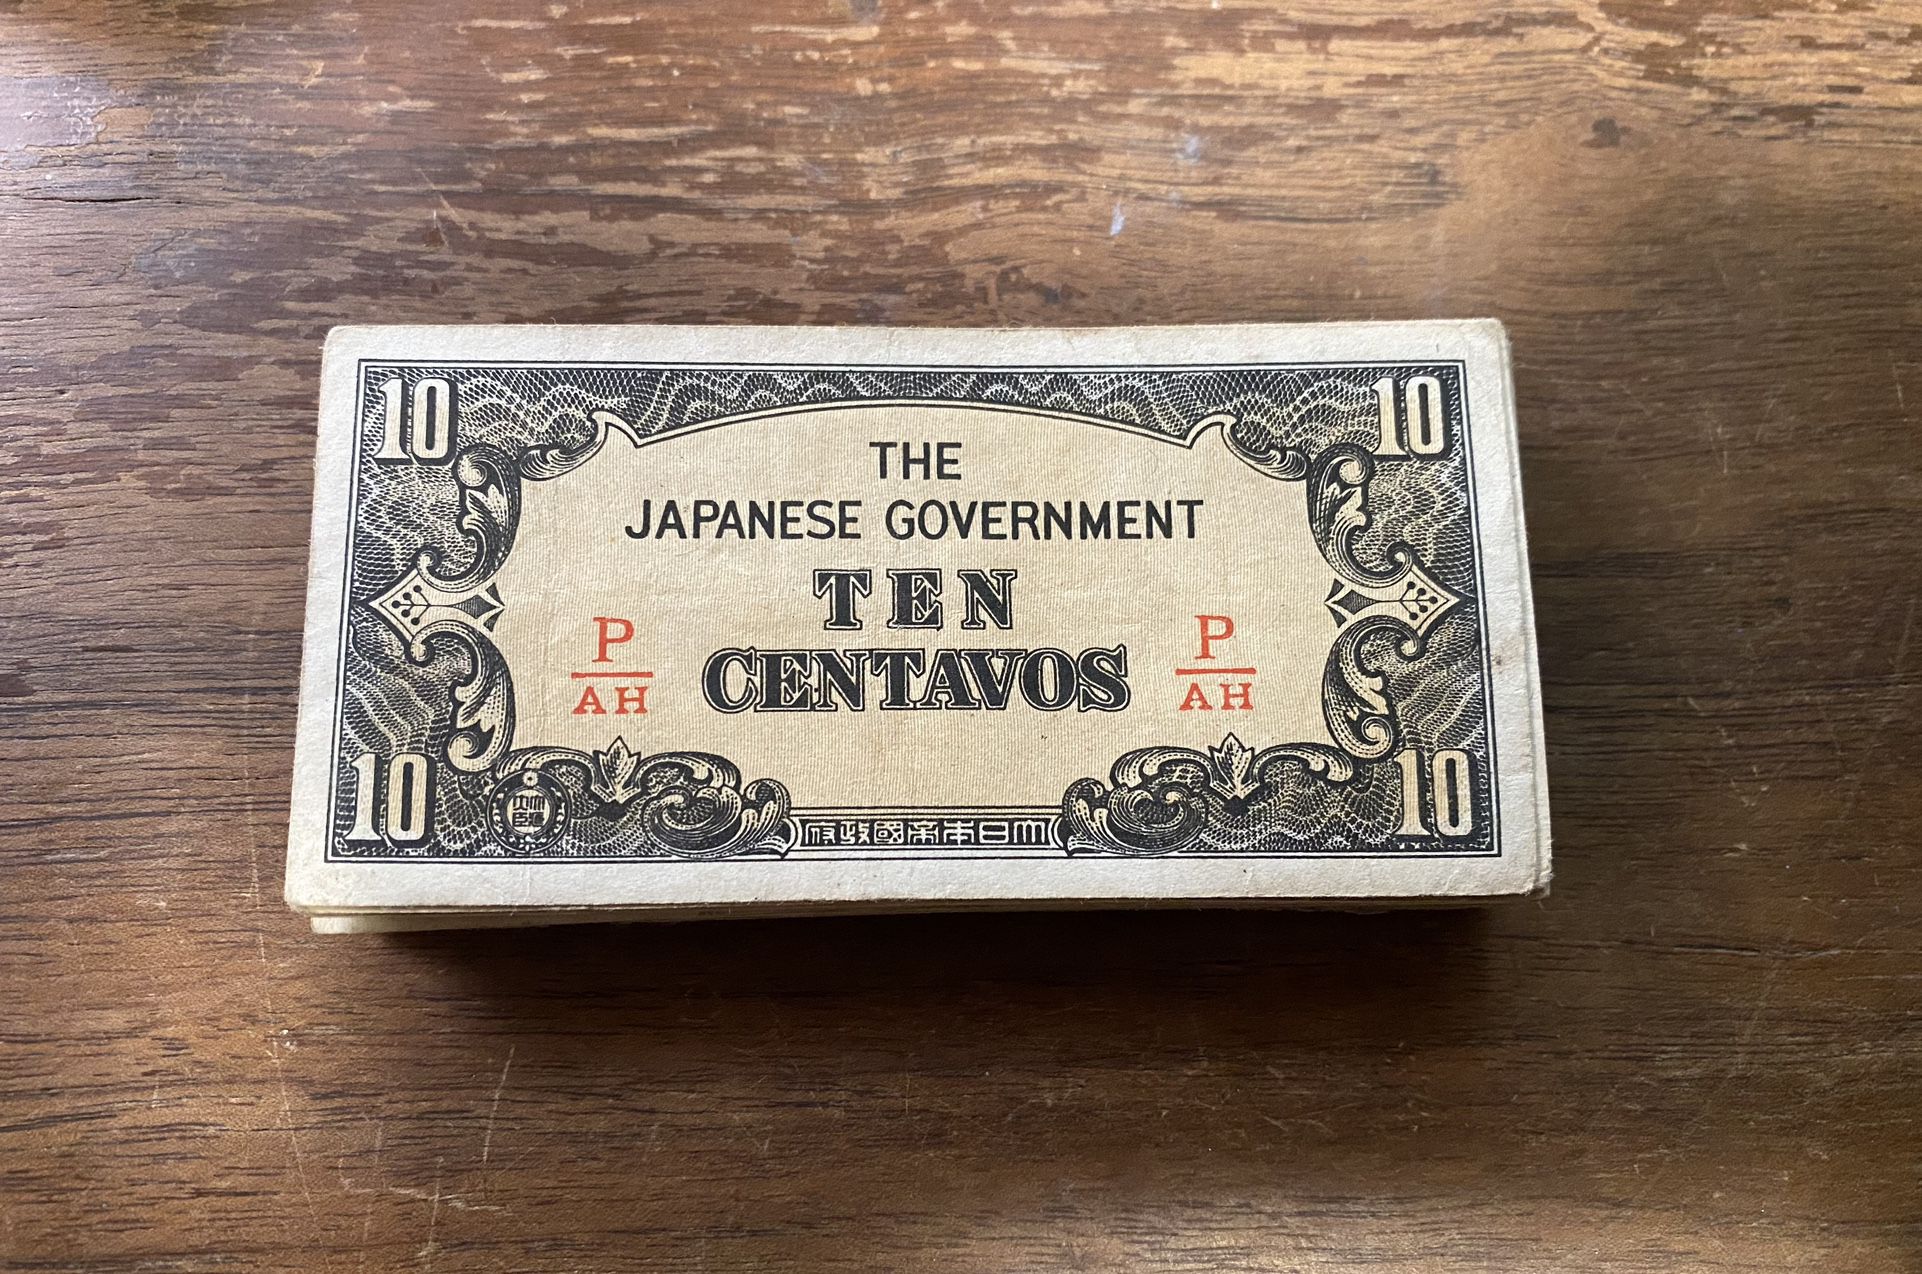 Vintage Japanese Money 